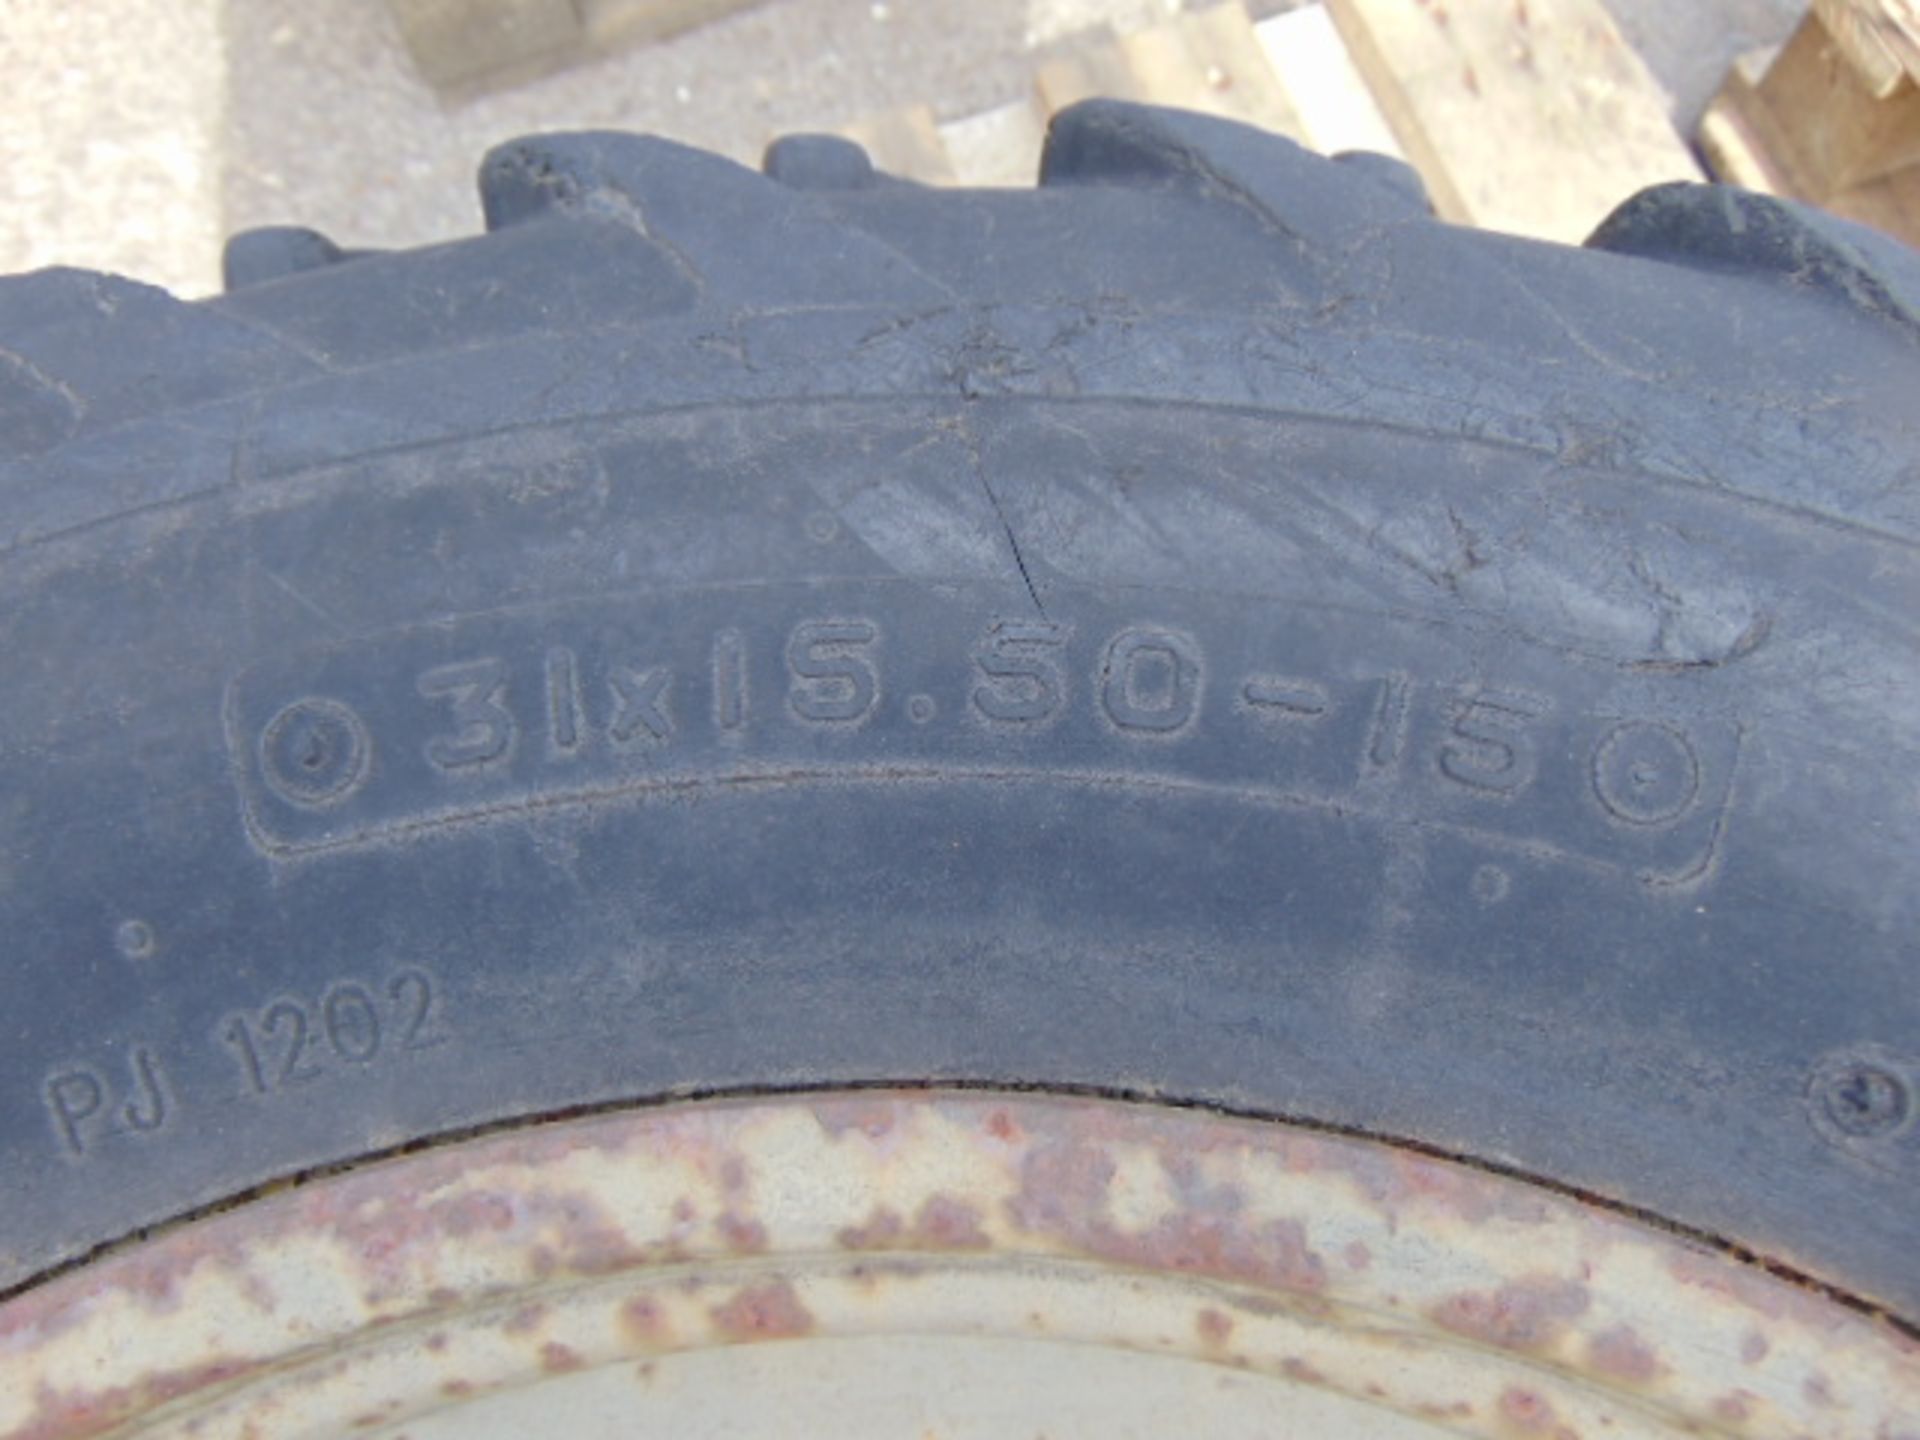 1 x Simex Tredlite 31X15.50-15 Tyre on a 5 stud Rim - Image 6 of 6